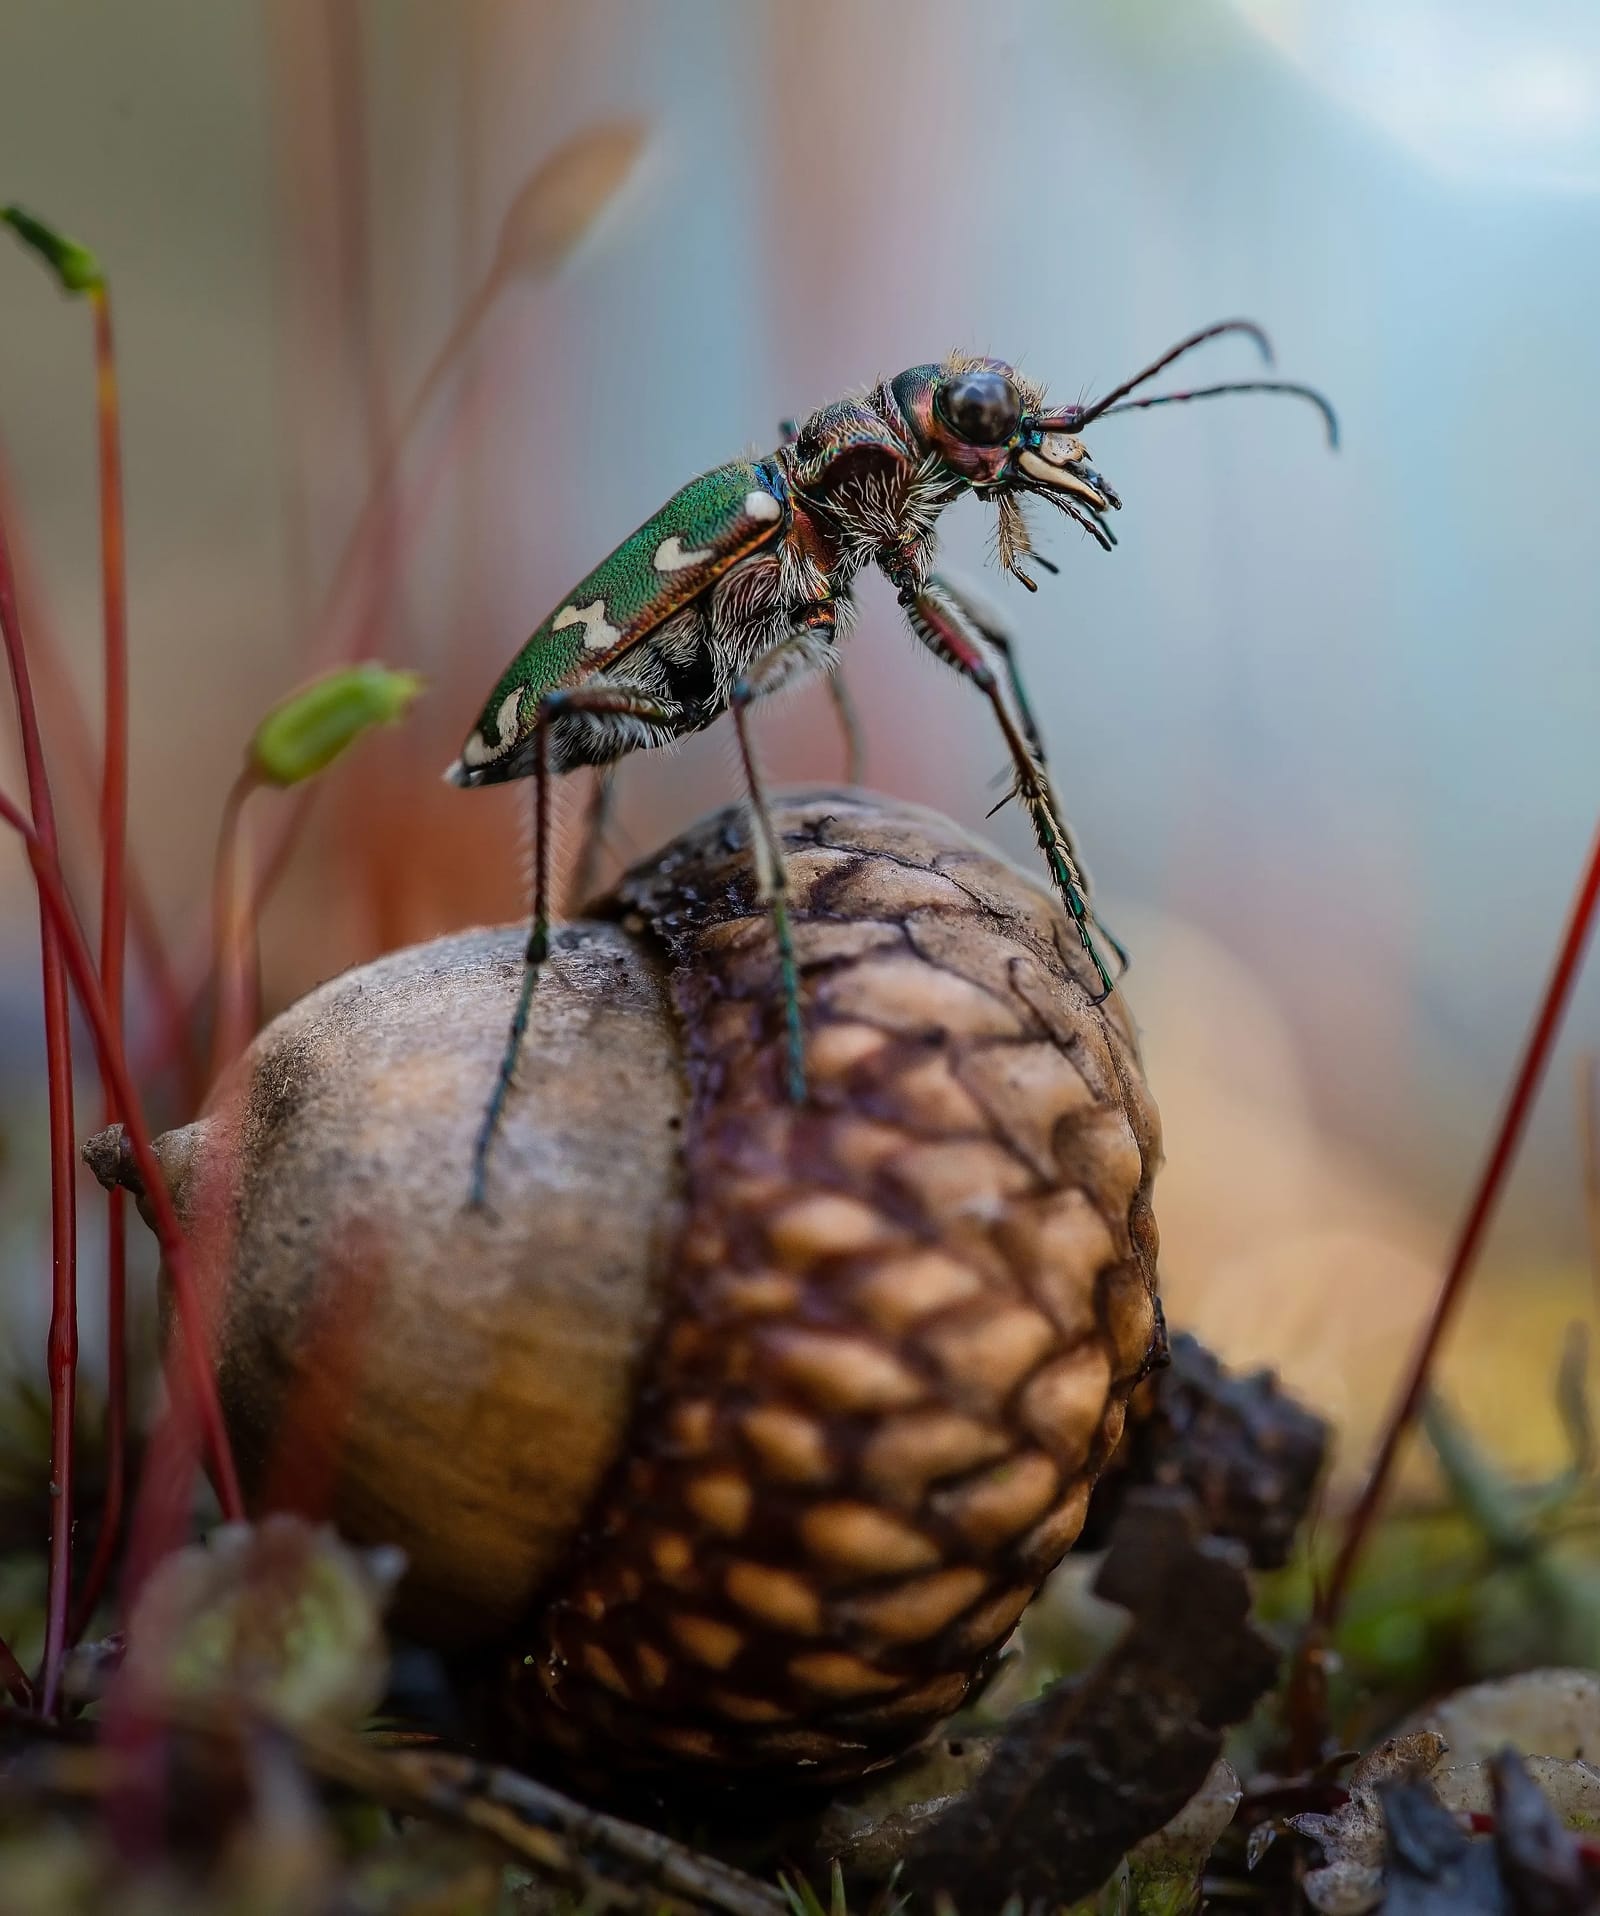 Photo of a stink bug on an acorn